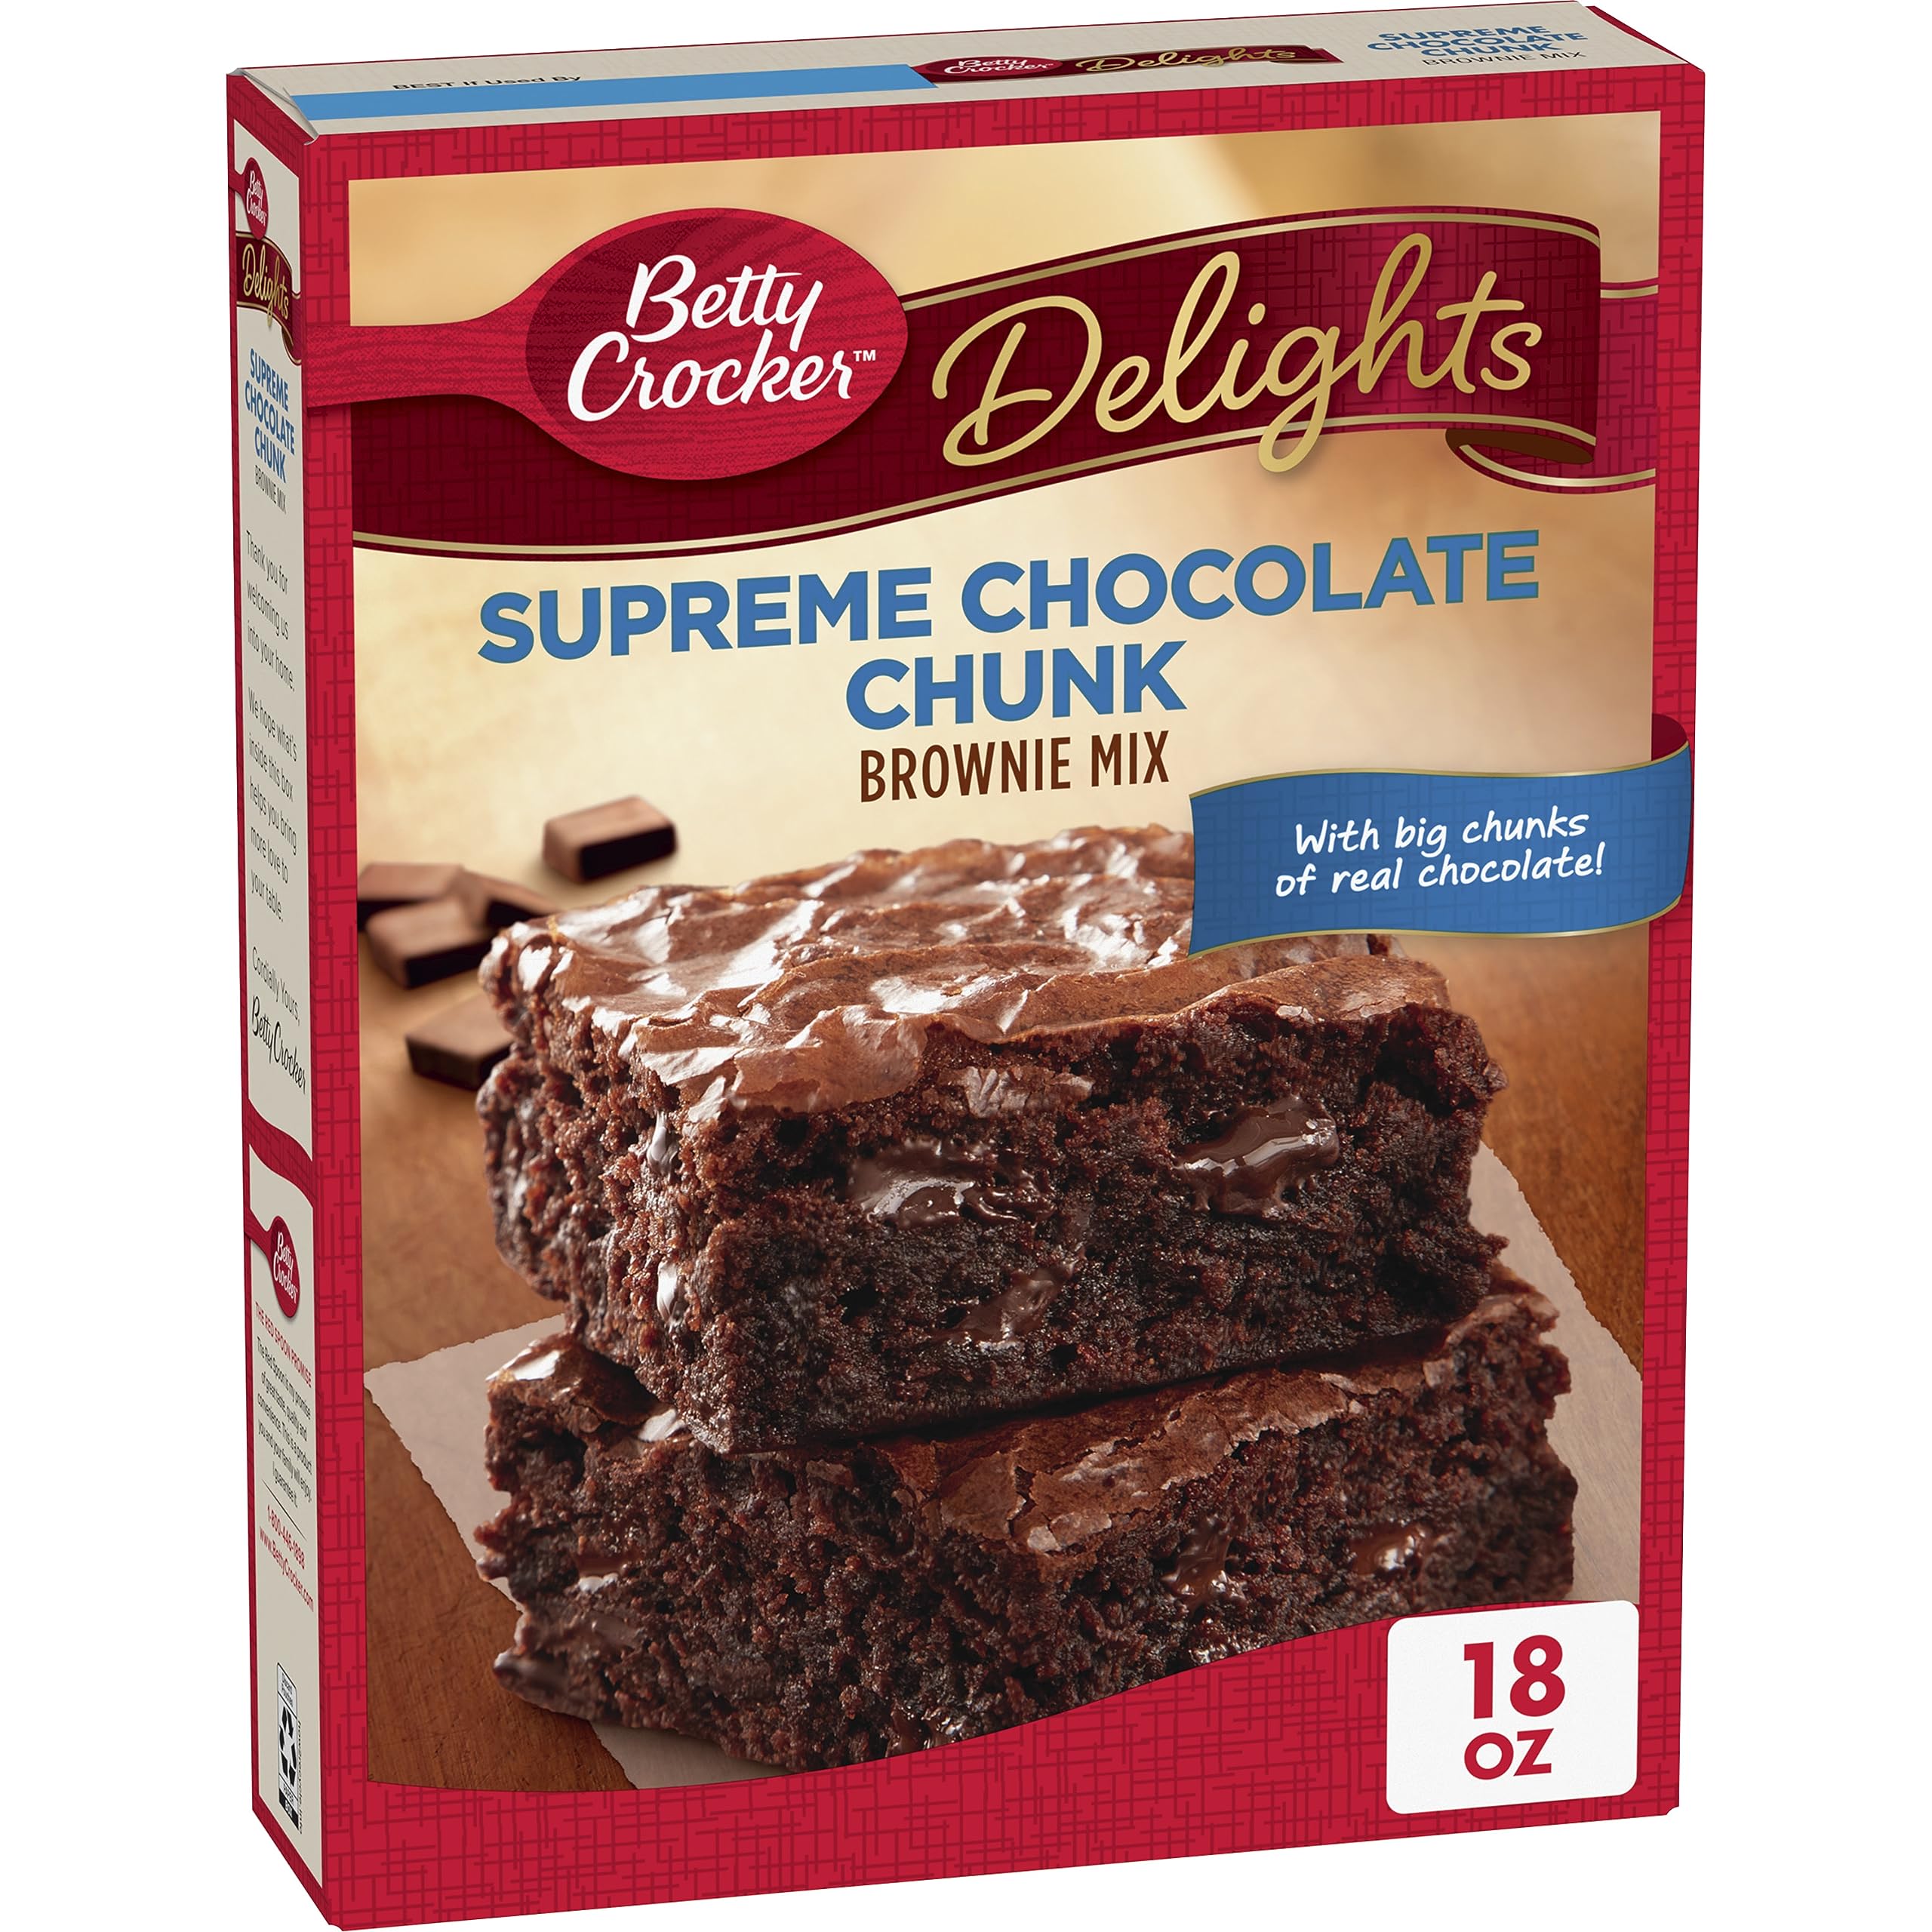 Betty Crocker Delights Supreme Chocolate Chunk Brownie Mix, 18 oz.~$1.94 @ Amazon~Free Prime Shipping!